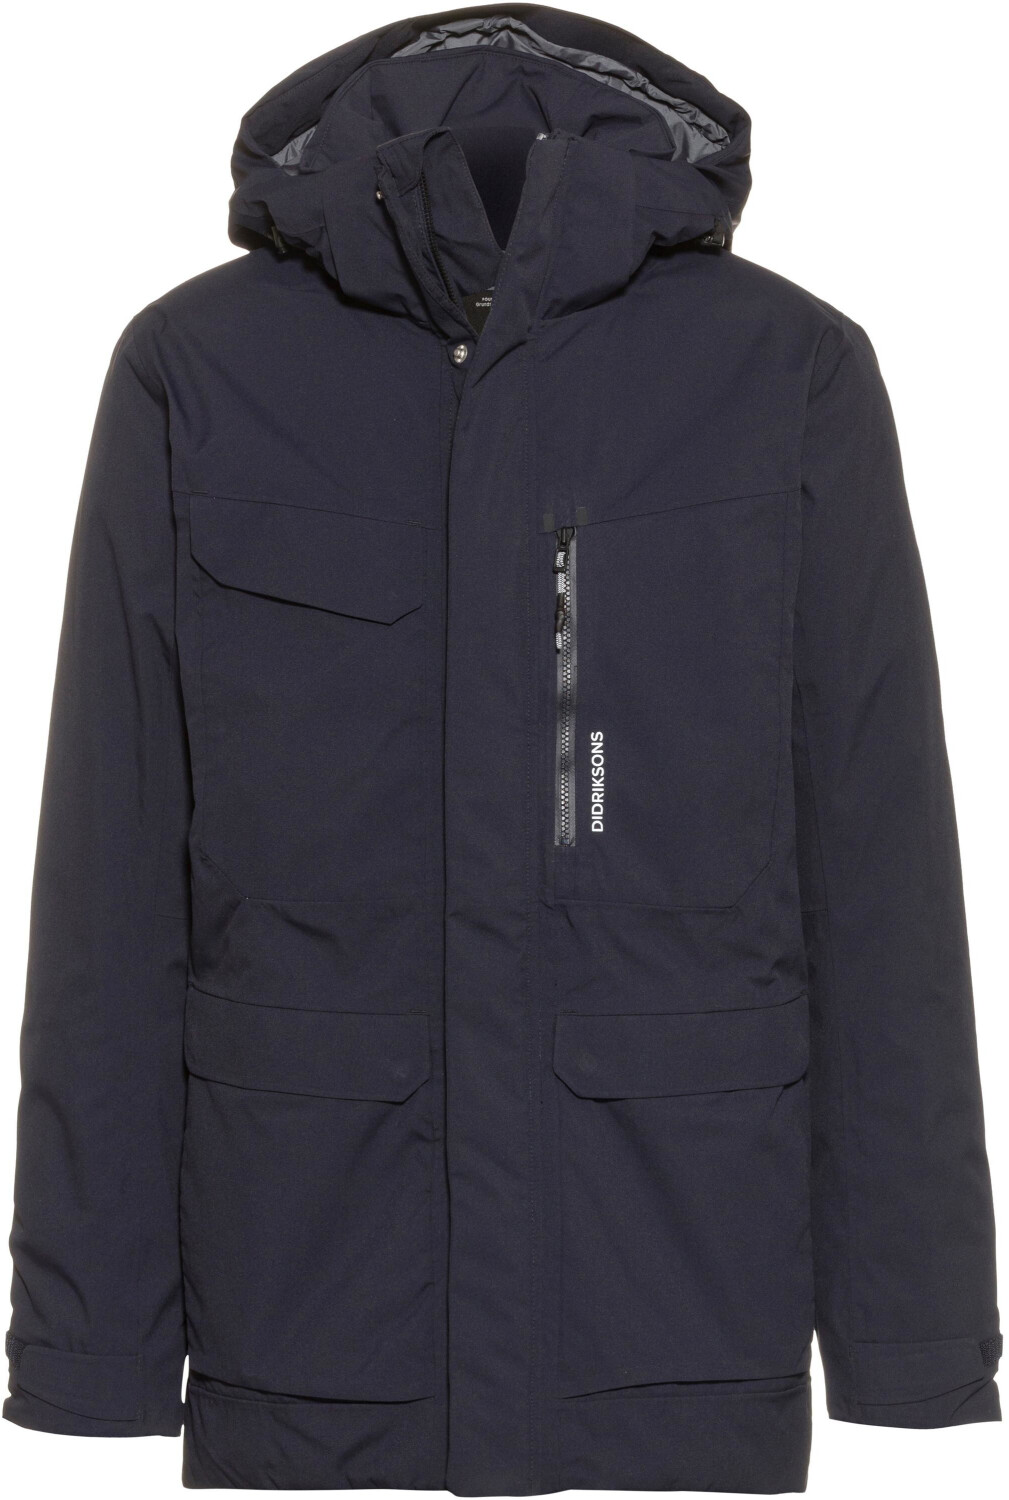 Buy Didriksons Sebastian Men's Jacket dark night blue from £169.99 ...